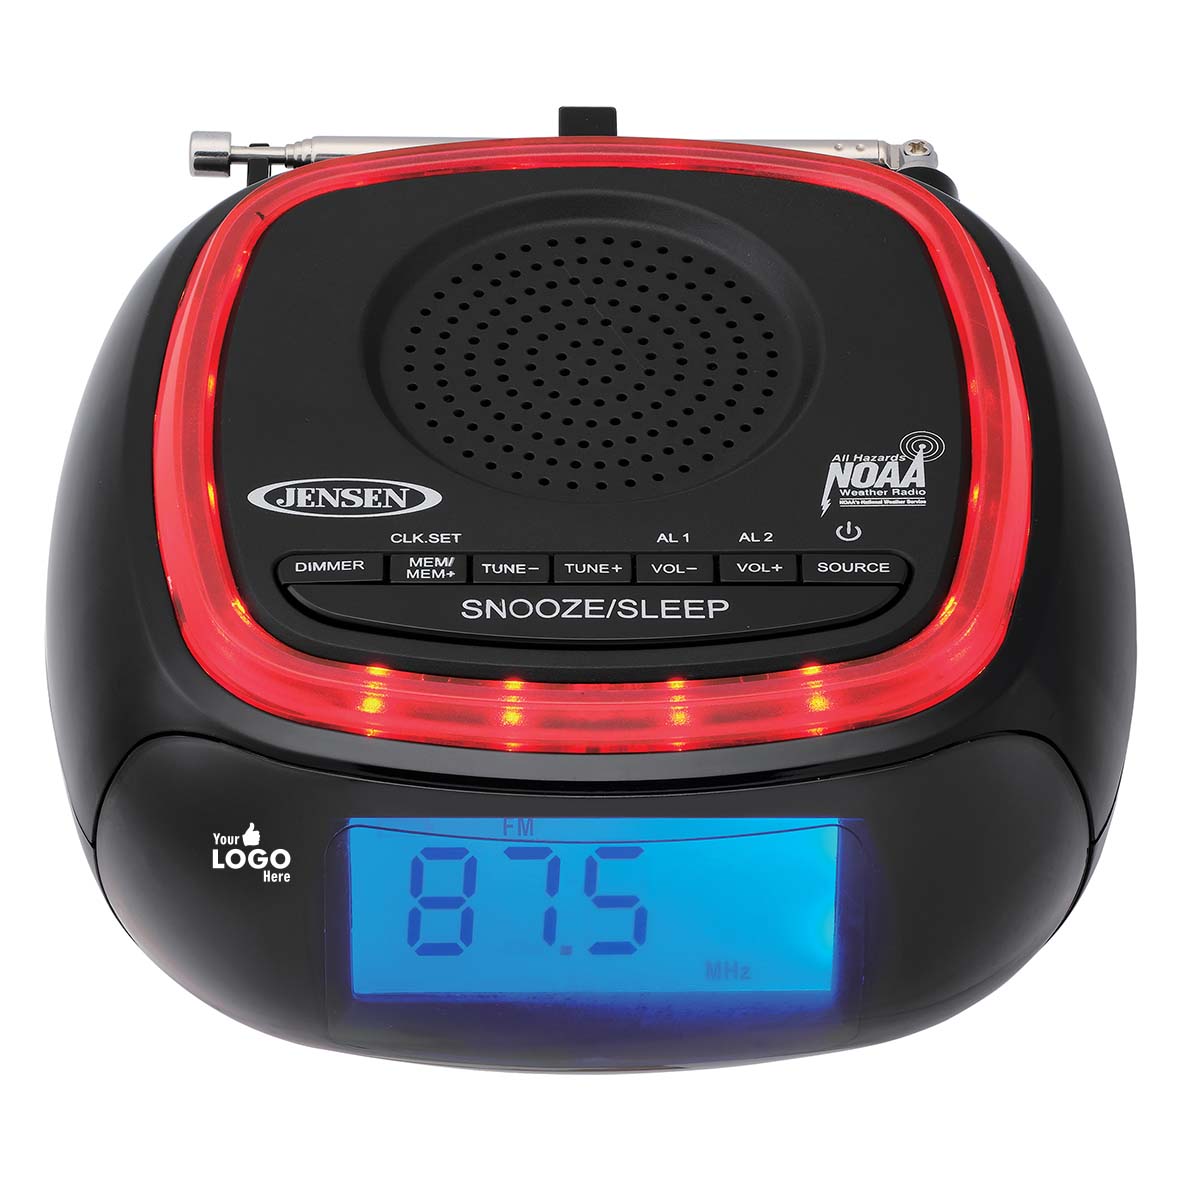 
                  
                    Jensen Audio Digital AM/FM Weather Band Alarm Clock Radio with NOAA Weather Alert and LED Alert Indicator Ring
                  
                